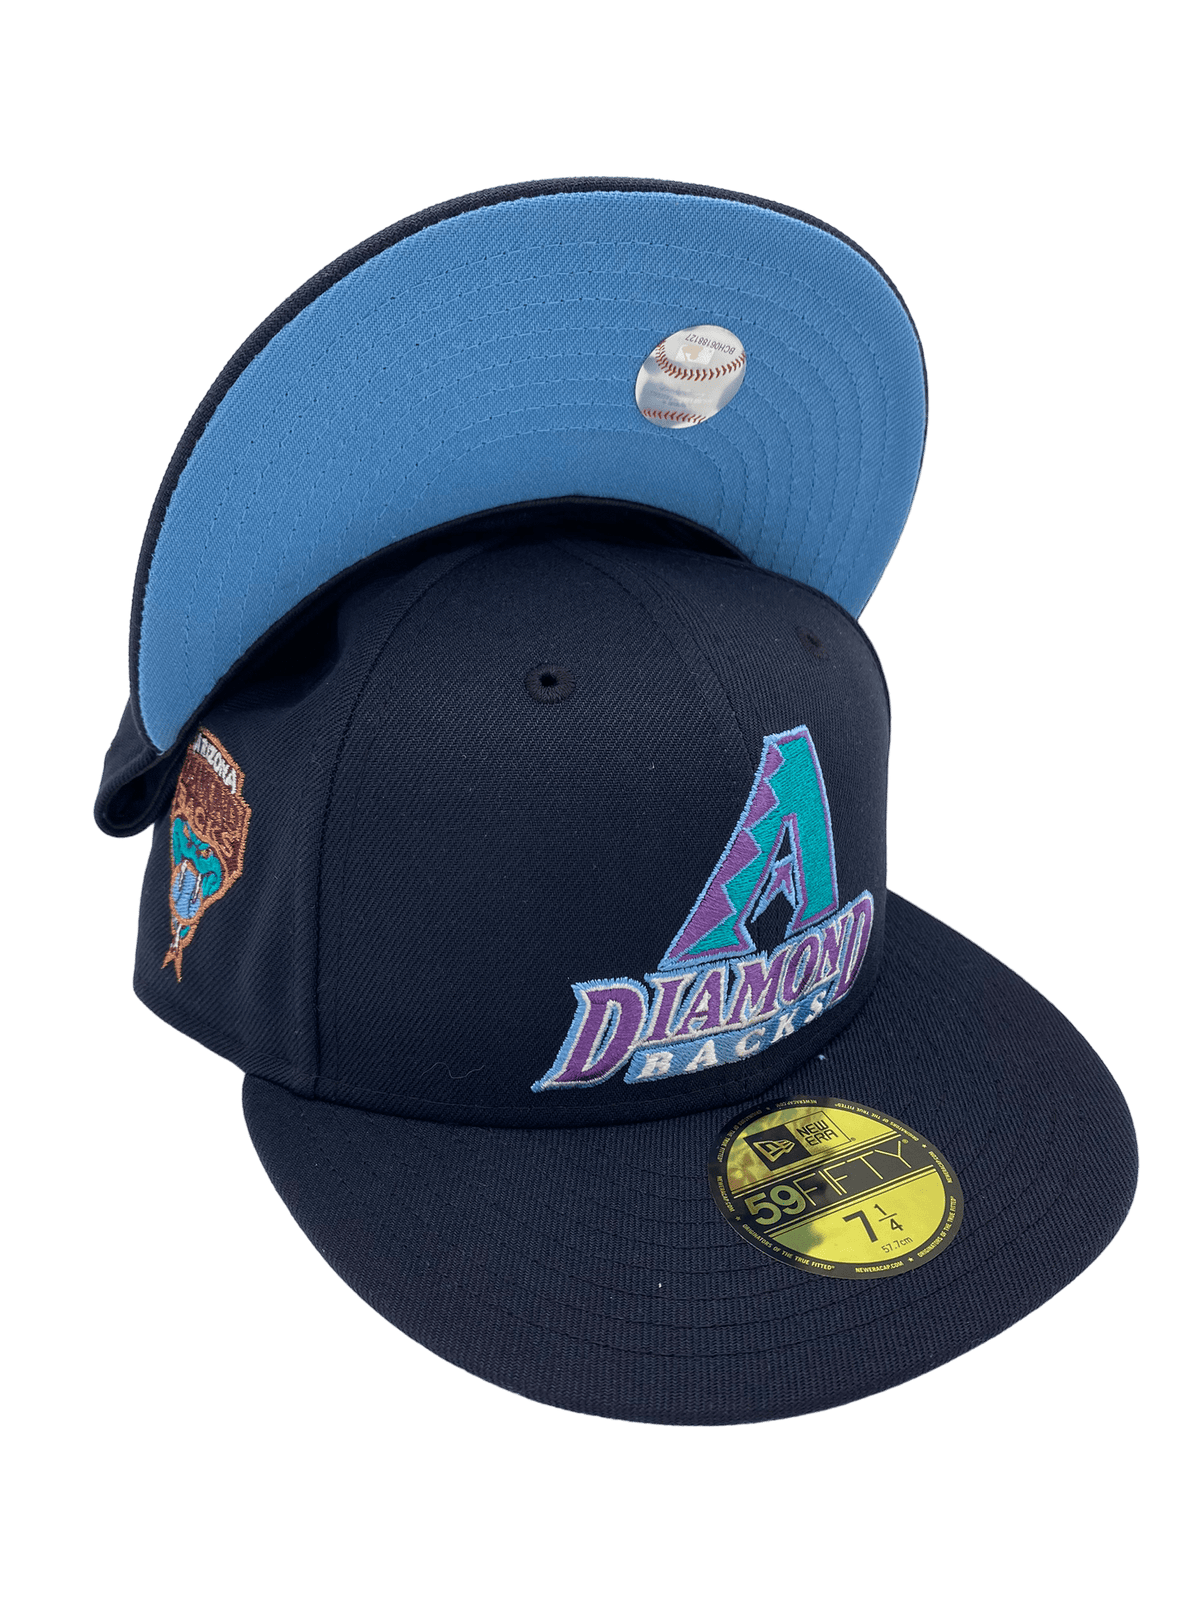 Arizona Diamondbacks City Connect 59FIFTY Fitted MLB Cap Gold